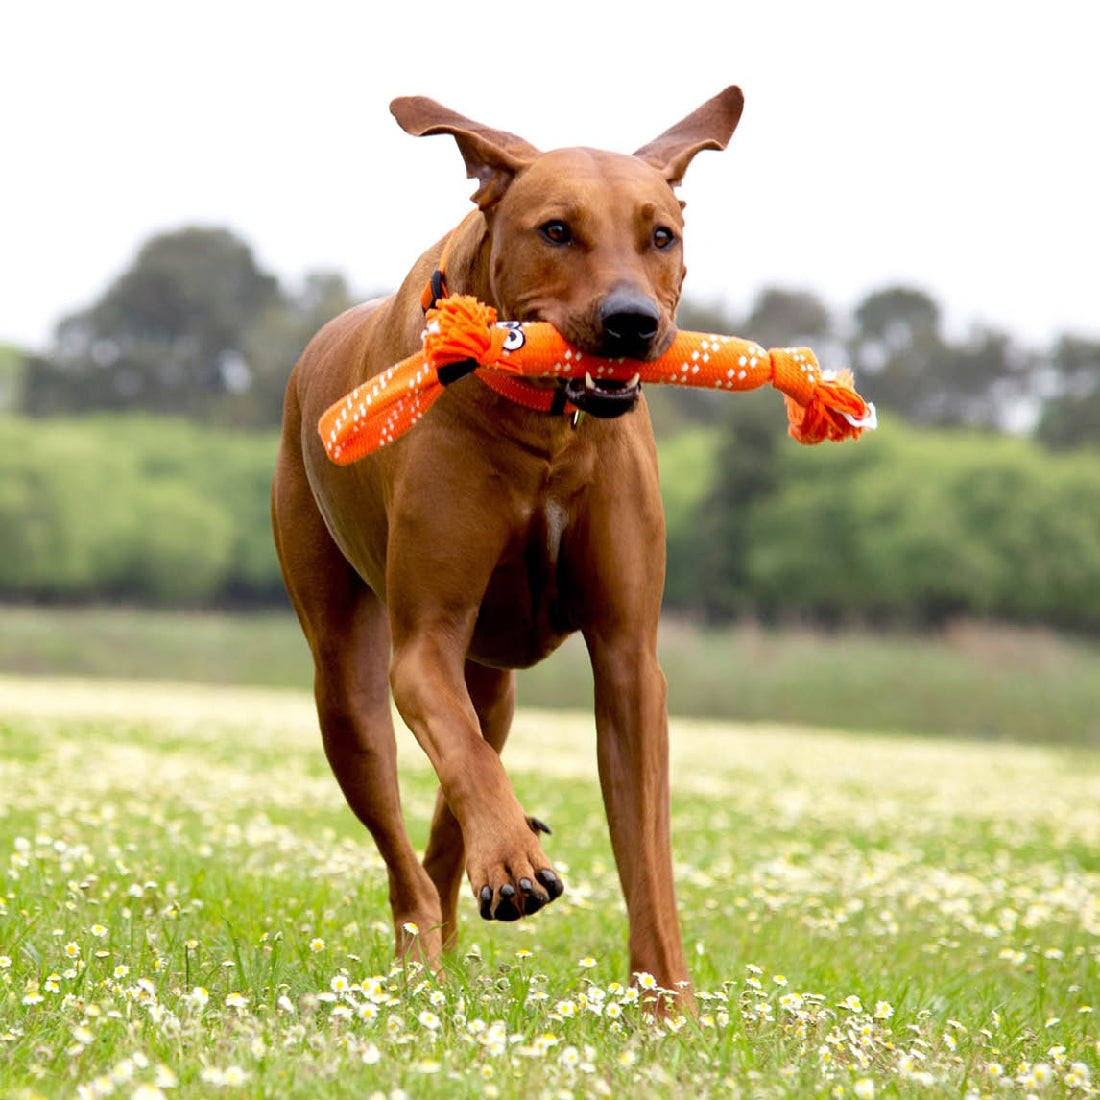 Dog carrying an orange Rogz toy in a flower field.